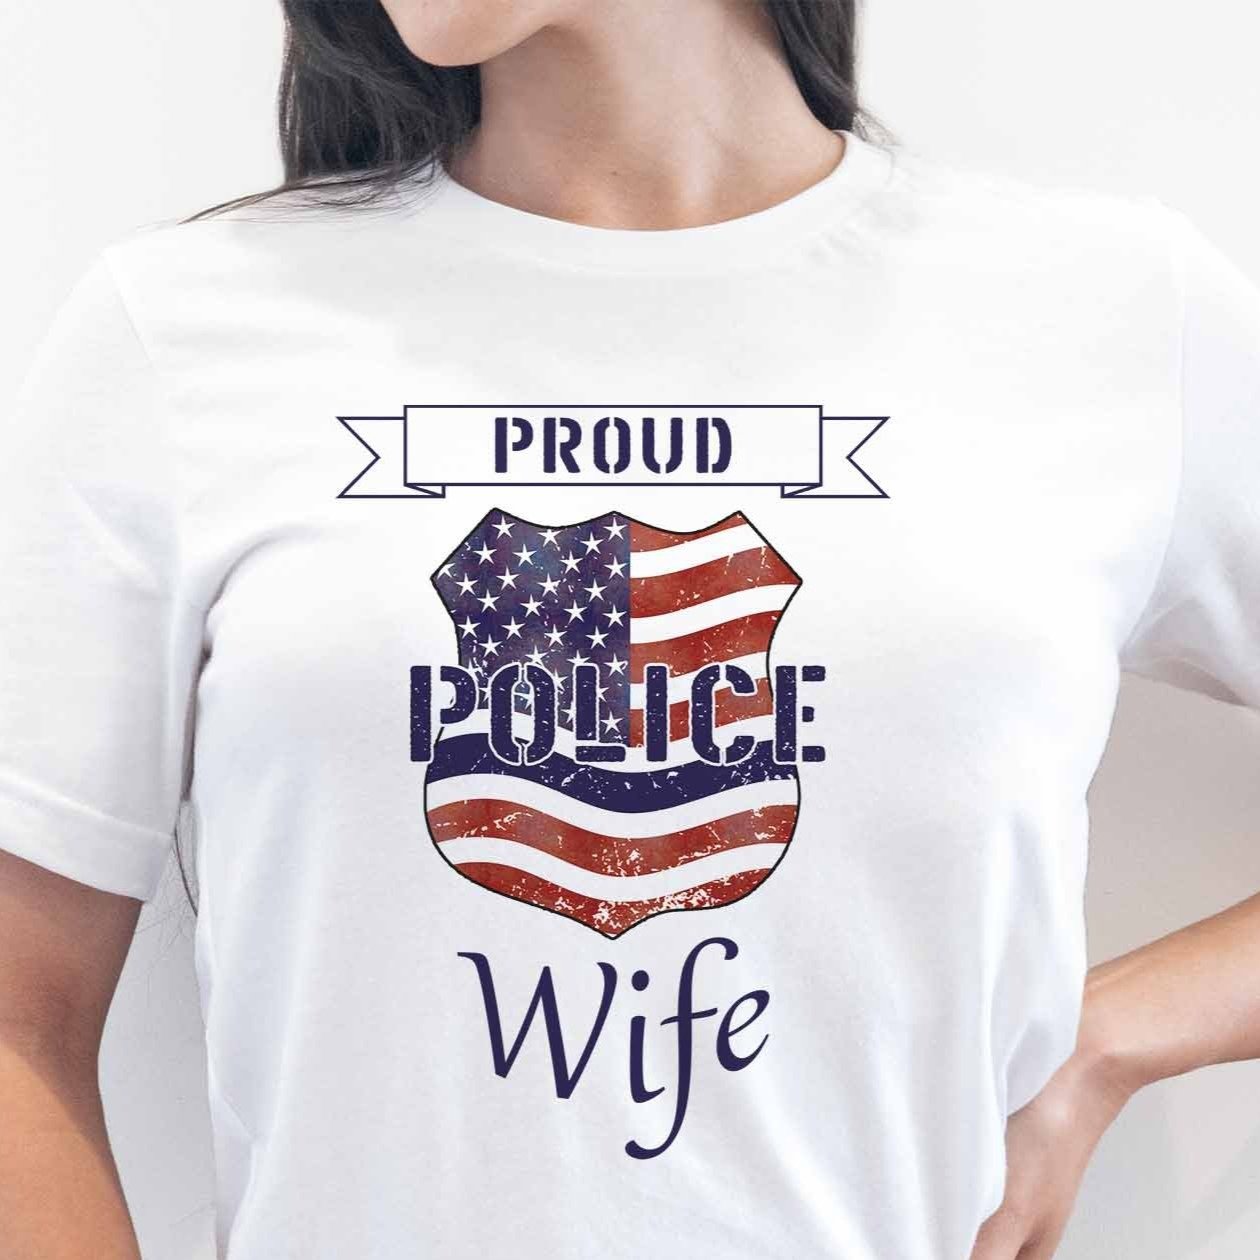 Proud Police Wife - My Custom Tee Party